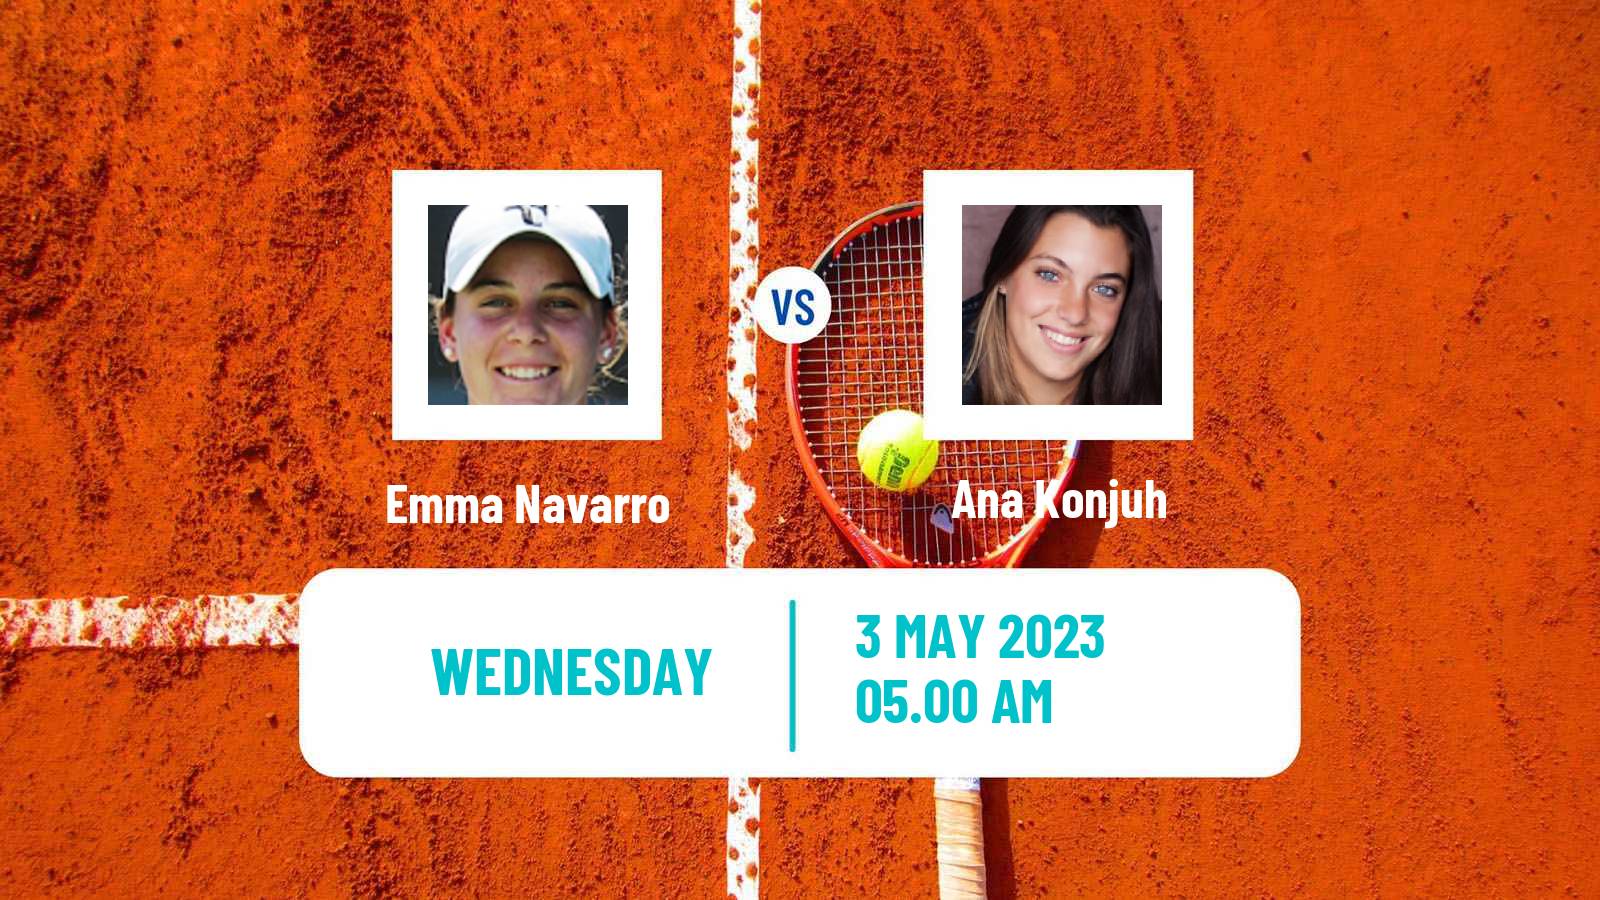 Tennis ATP Challenger Emma Navarro - Ana Konjuh